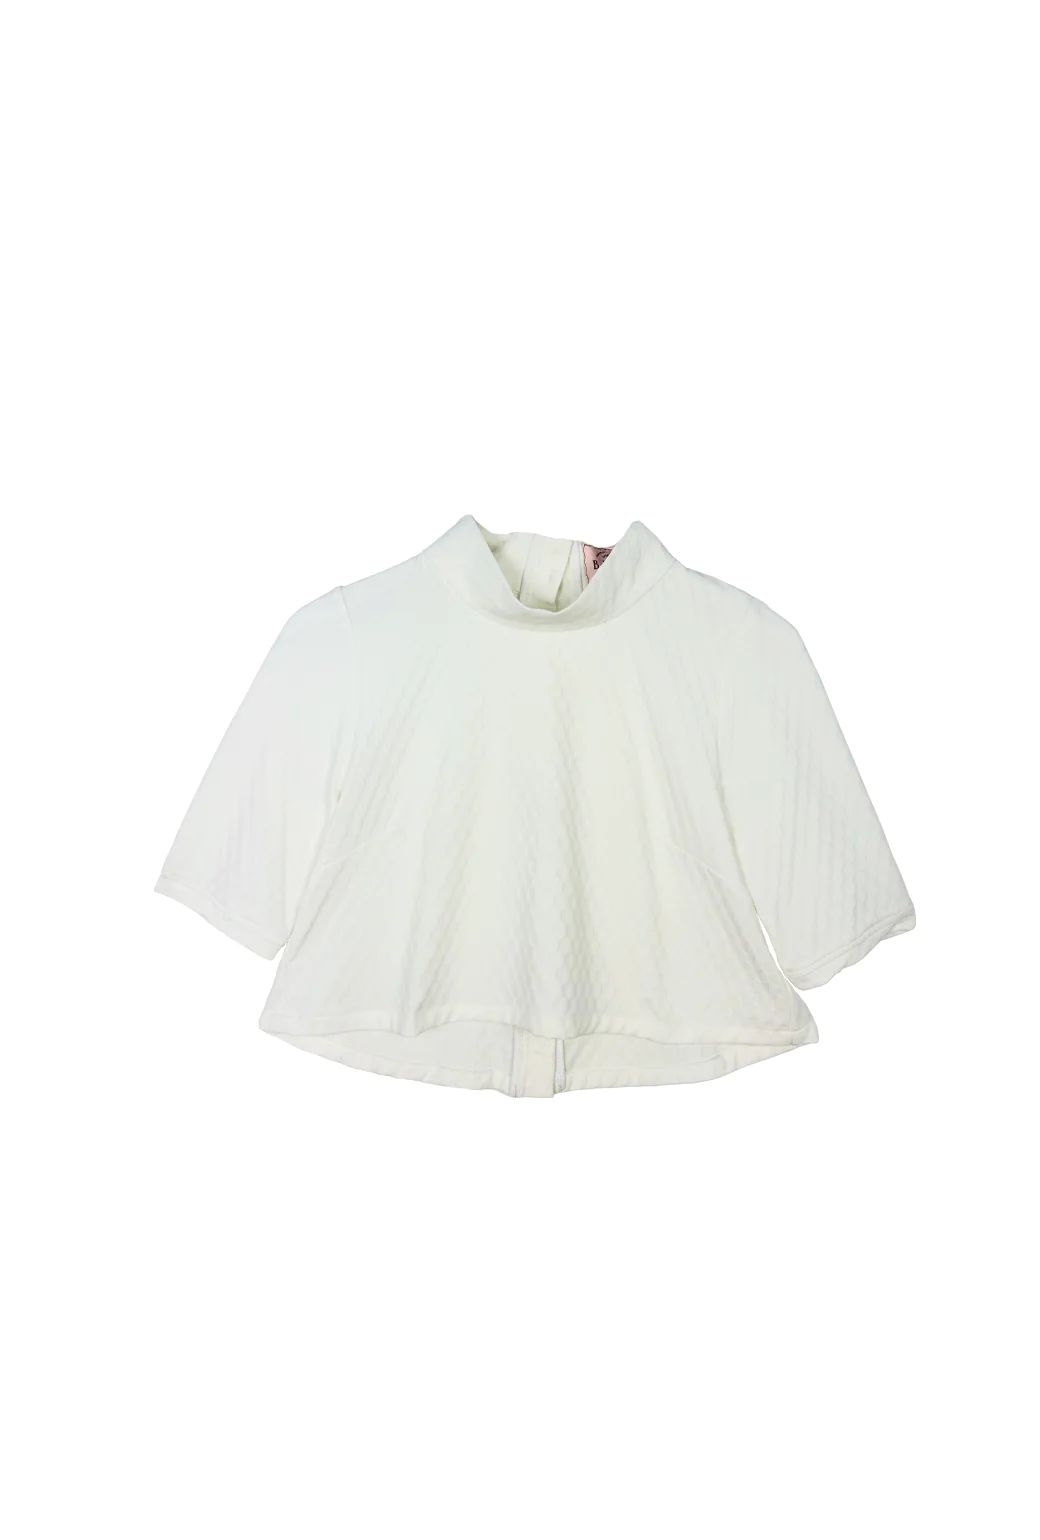 Buru x Kelly Golightly Twiggy Top - White Knit Jacquard | Shop BURU